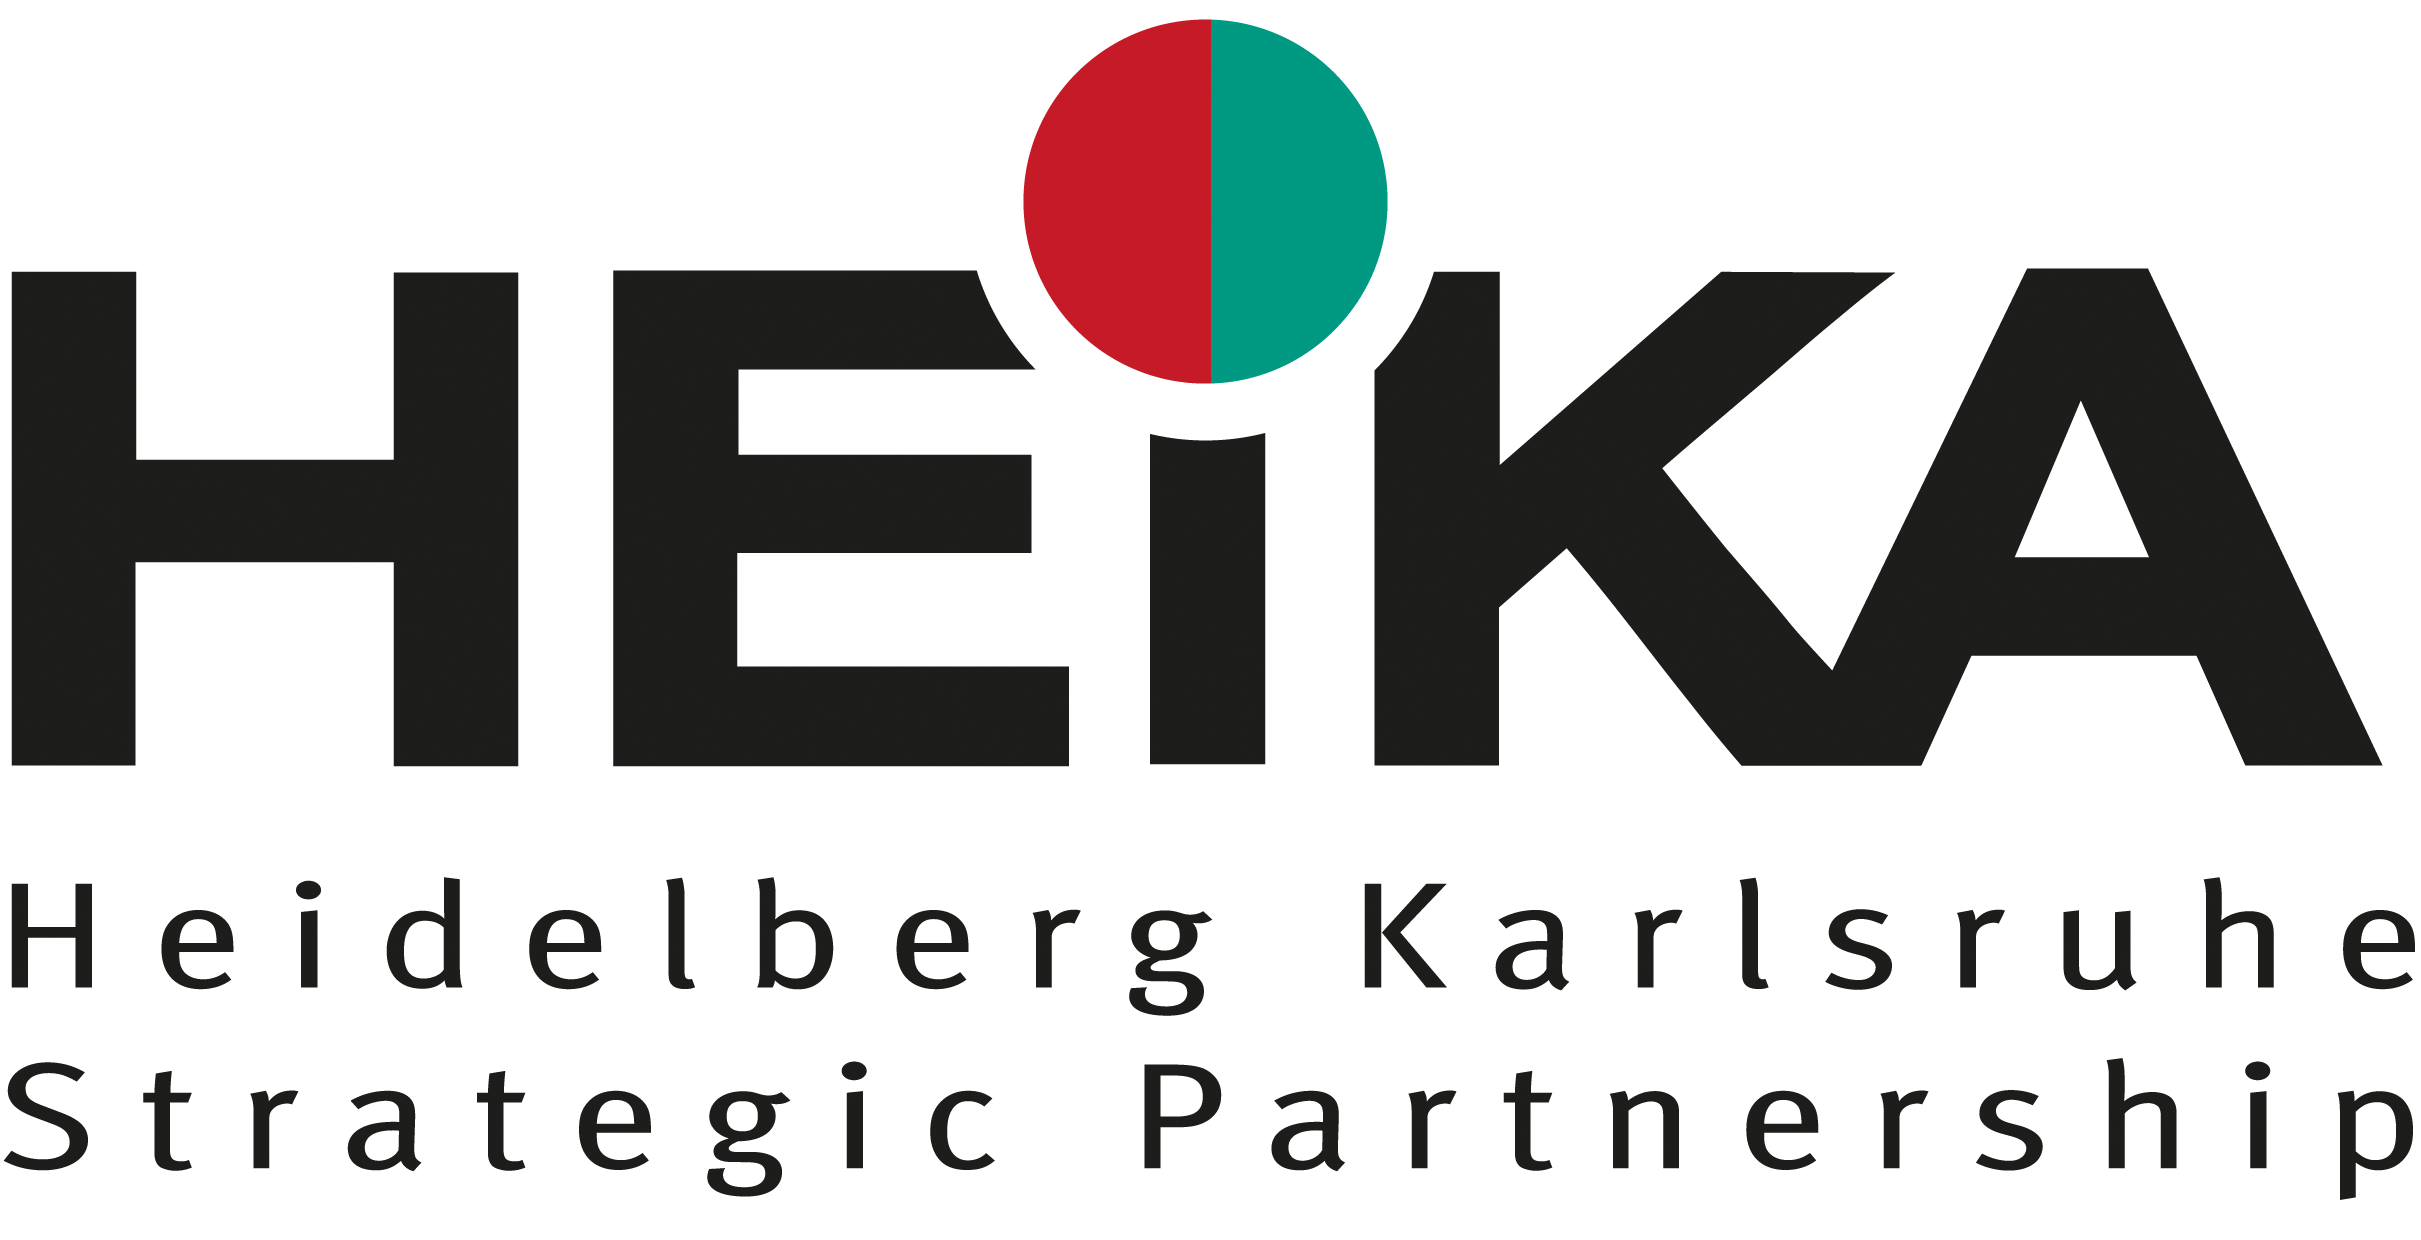 Logo of Heidelberg Karlsruhe Strategic Partnership